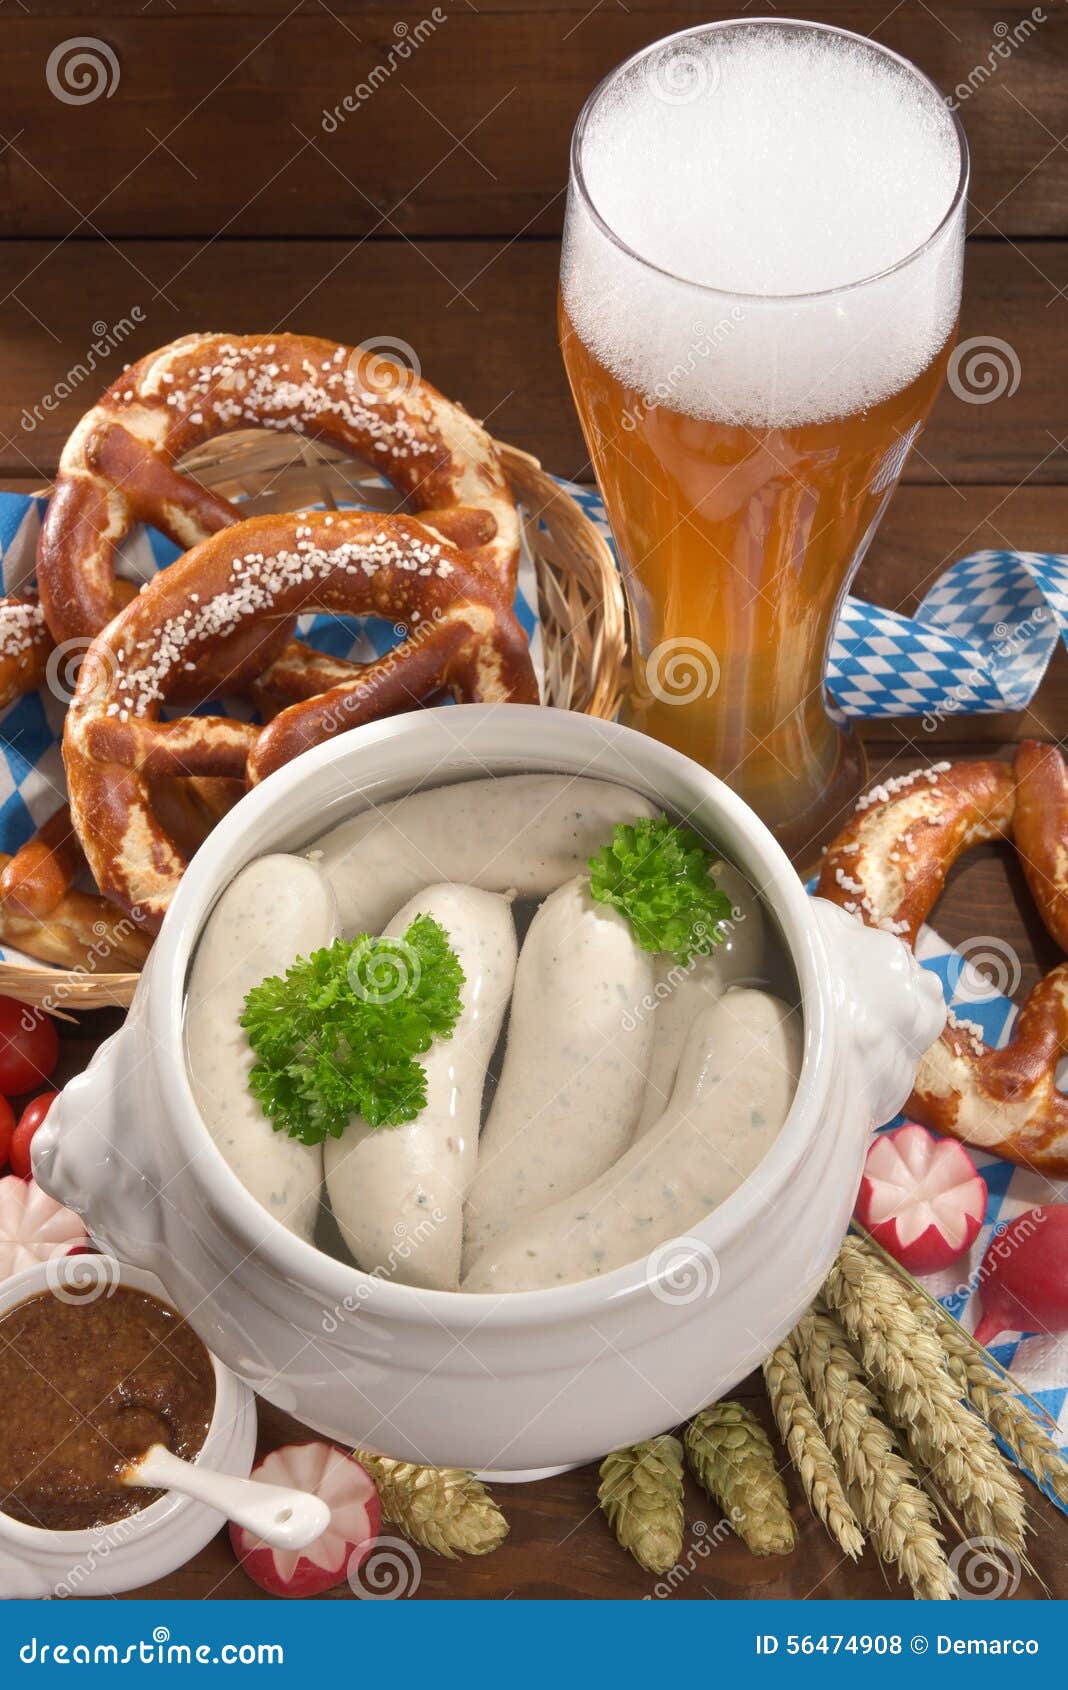 bavarian veal sausage breakfast